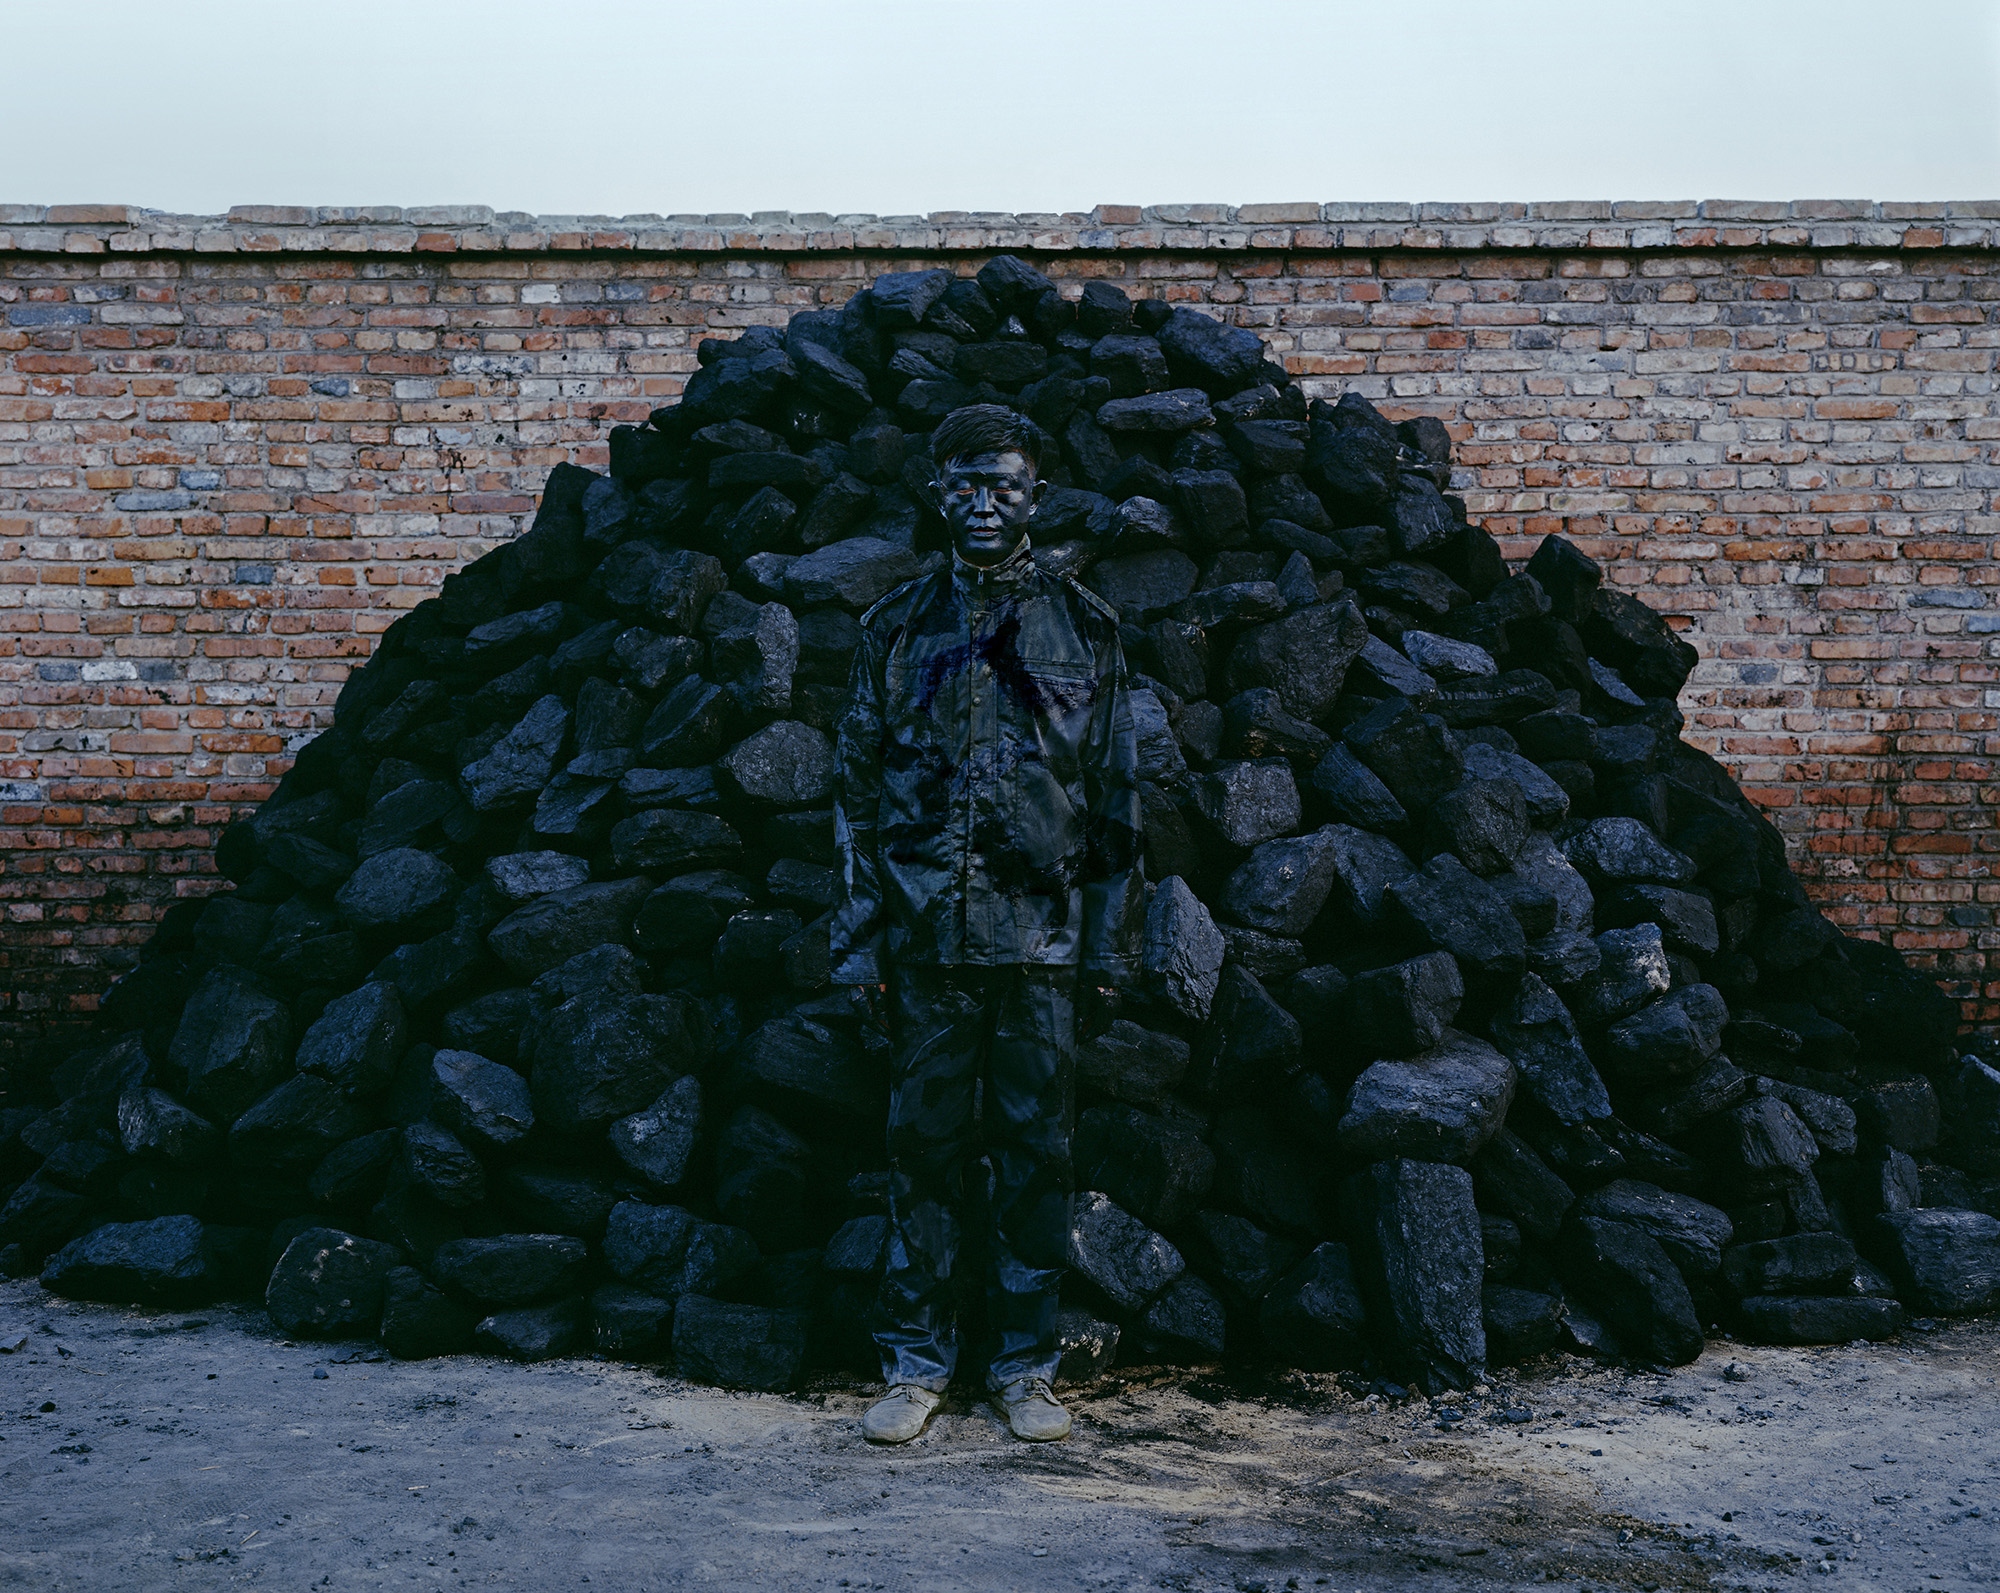 Liu Bolin, Hiding in the City, No. 95, Coal Pile, 2010. Chromogenic print. Loan courtesy of Eli Klein. Image courtesy of Eli Klein and the artist. © Liu Bolin